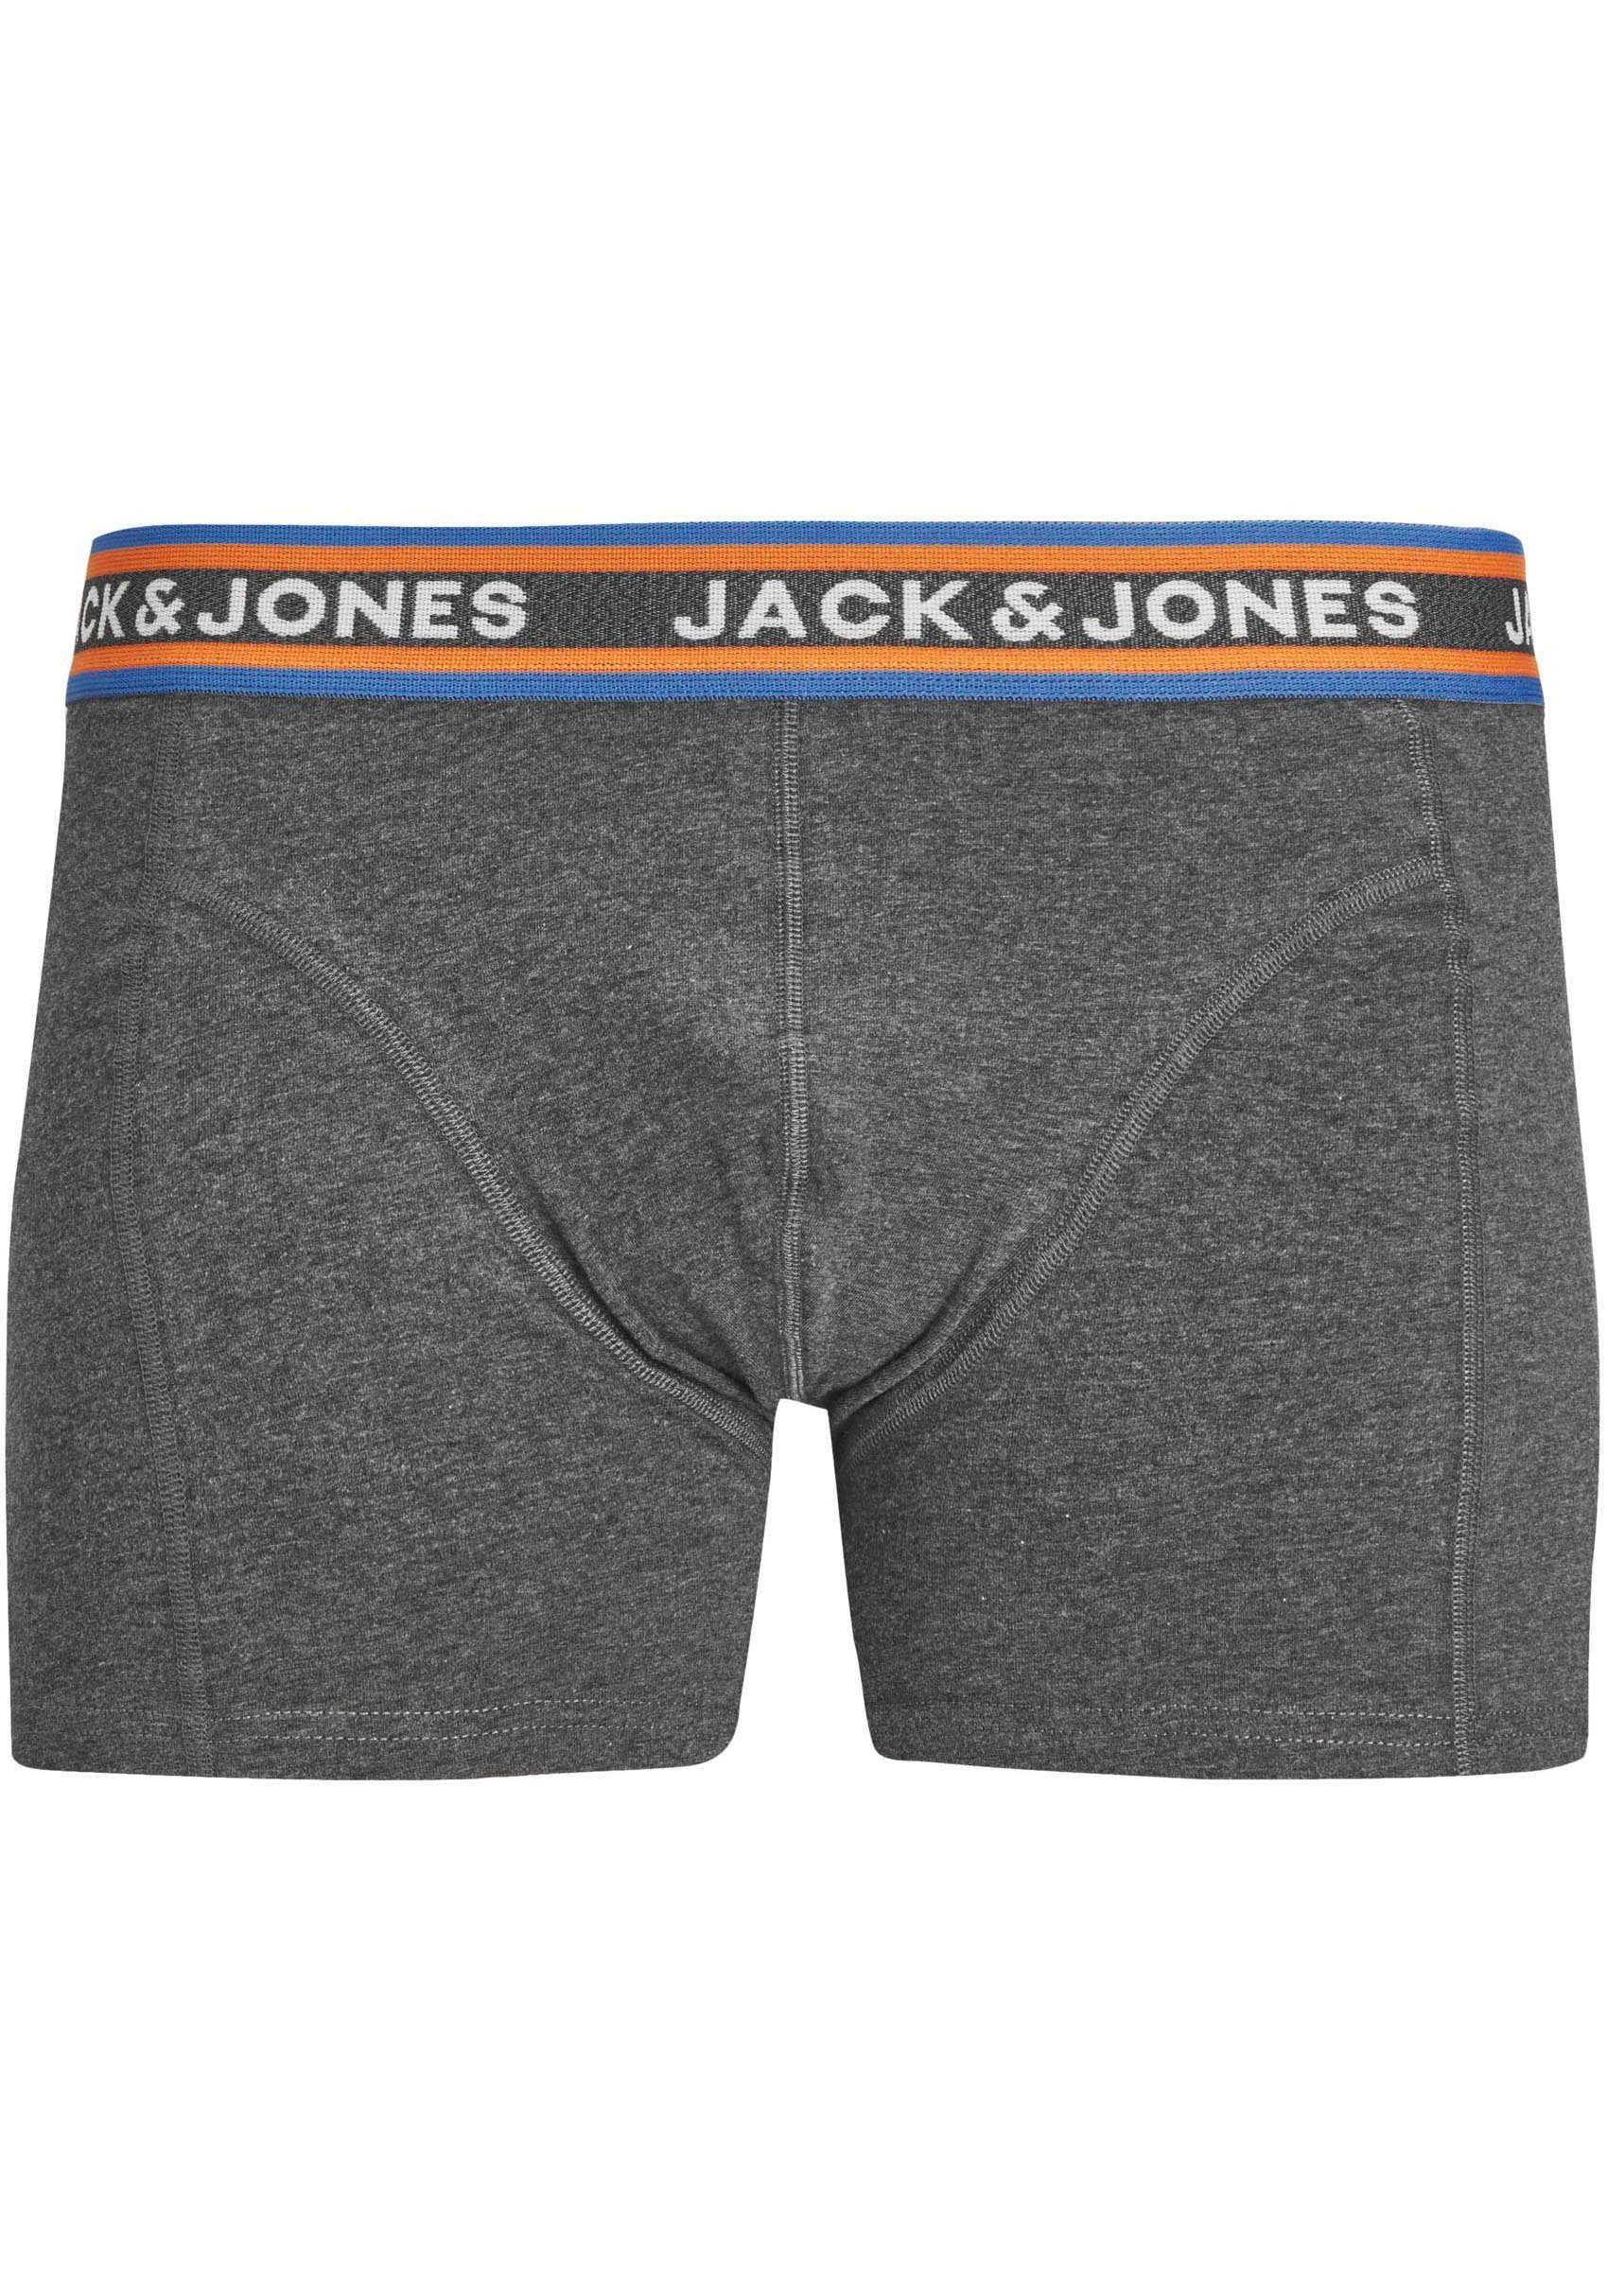 blazer 3 / TRUNKS 3-St) Jones & / JACMYLE NOOS (Packung, Trunk PACK Jack exub navy dgm